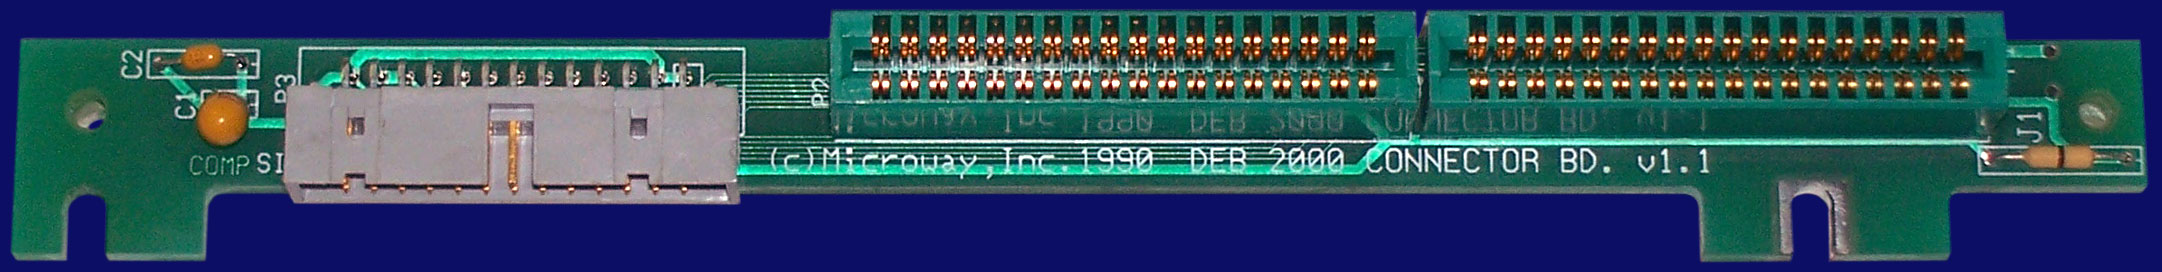 Microway DEB-2000 - Connector board, front side